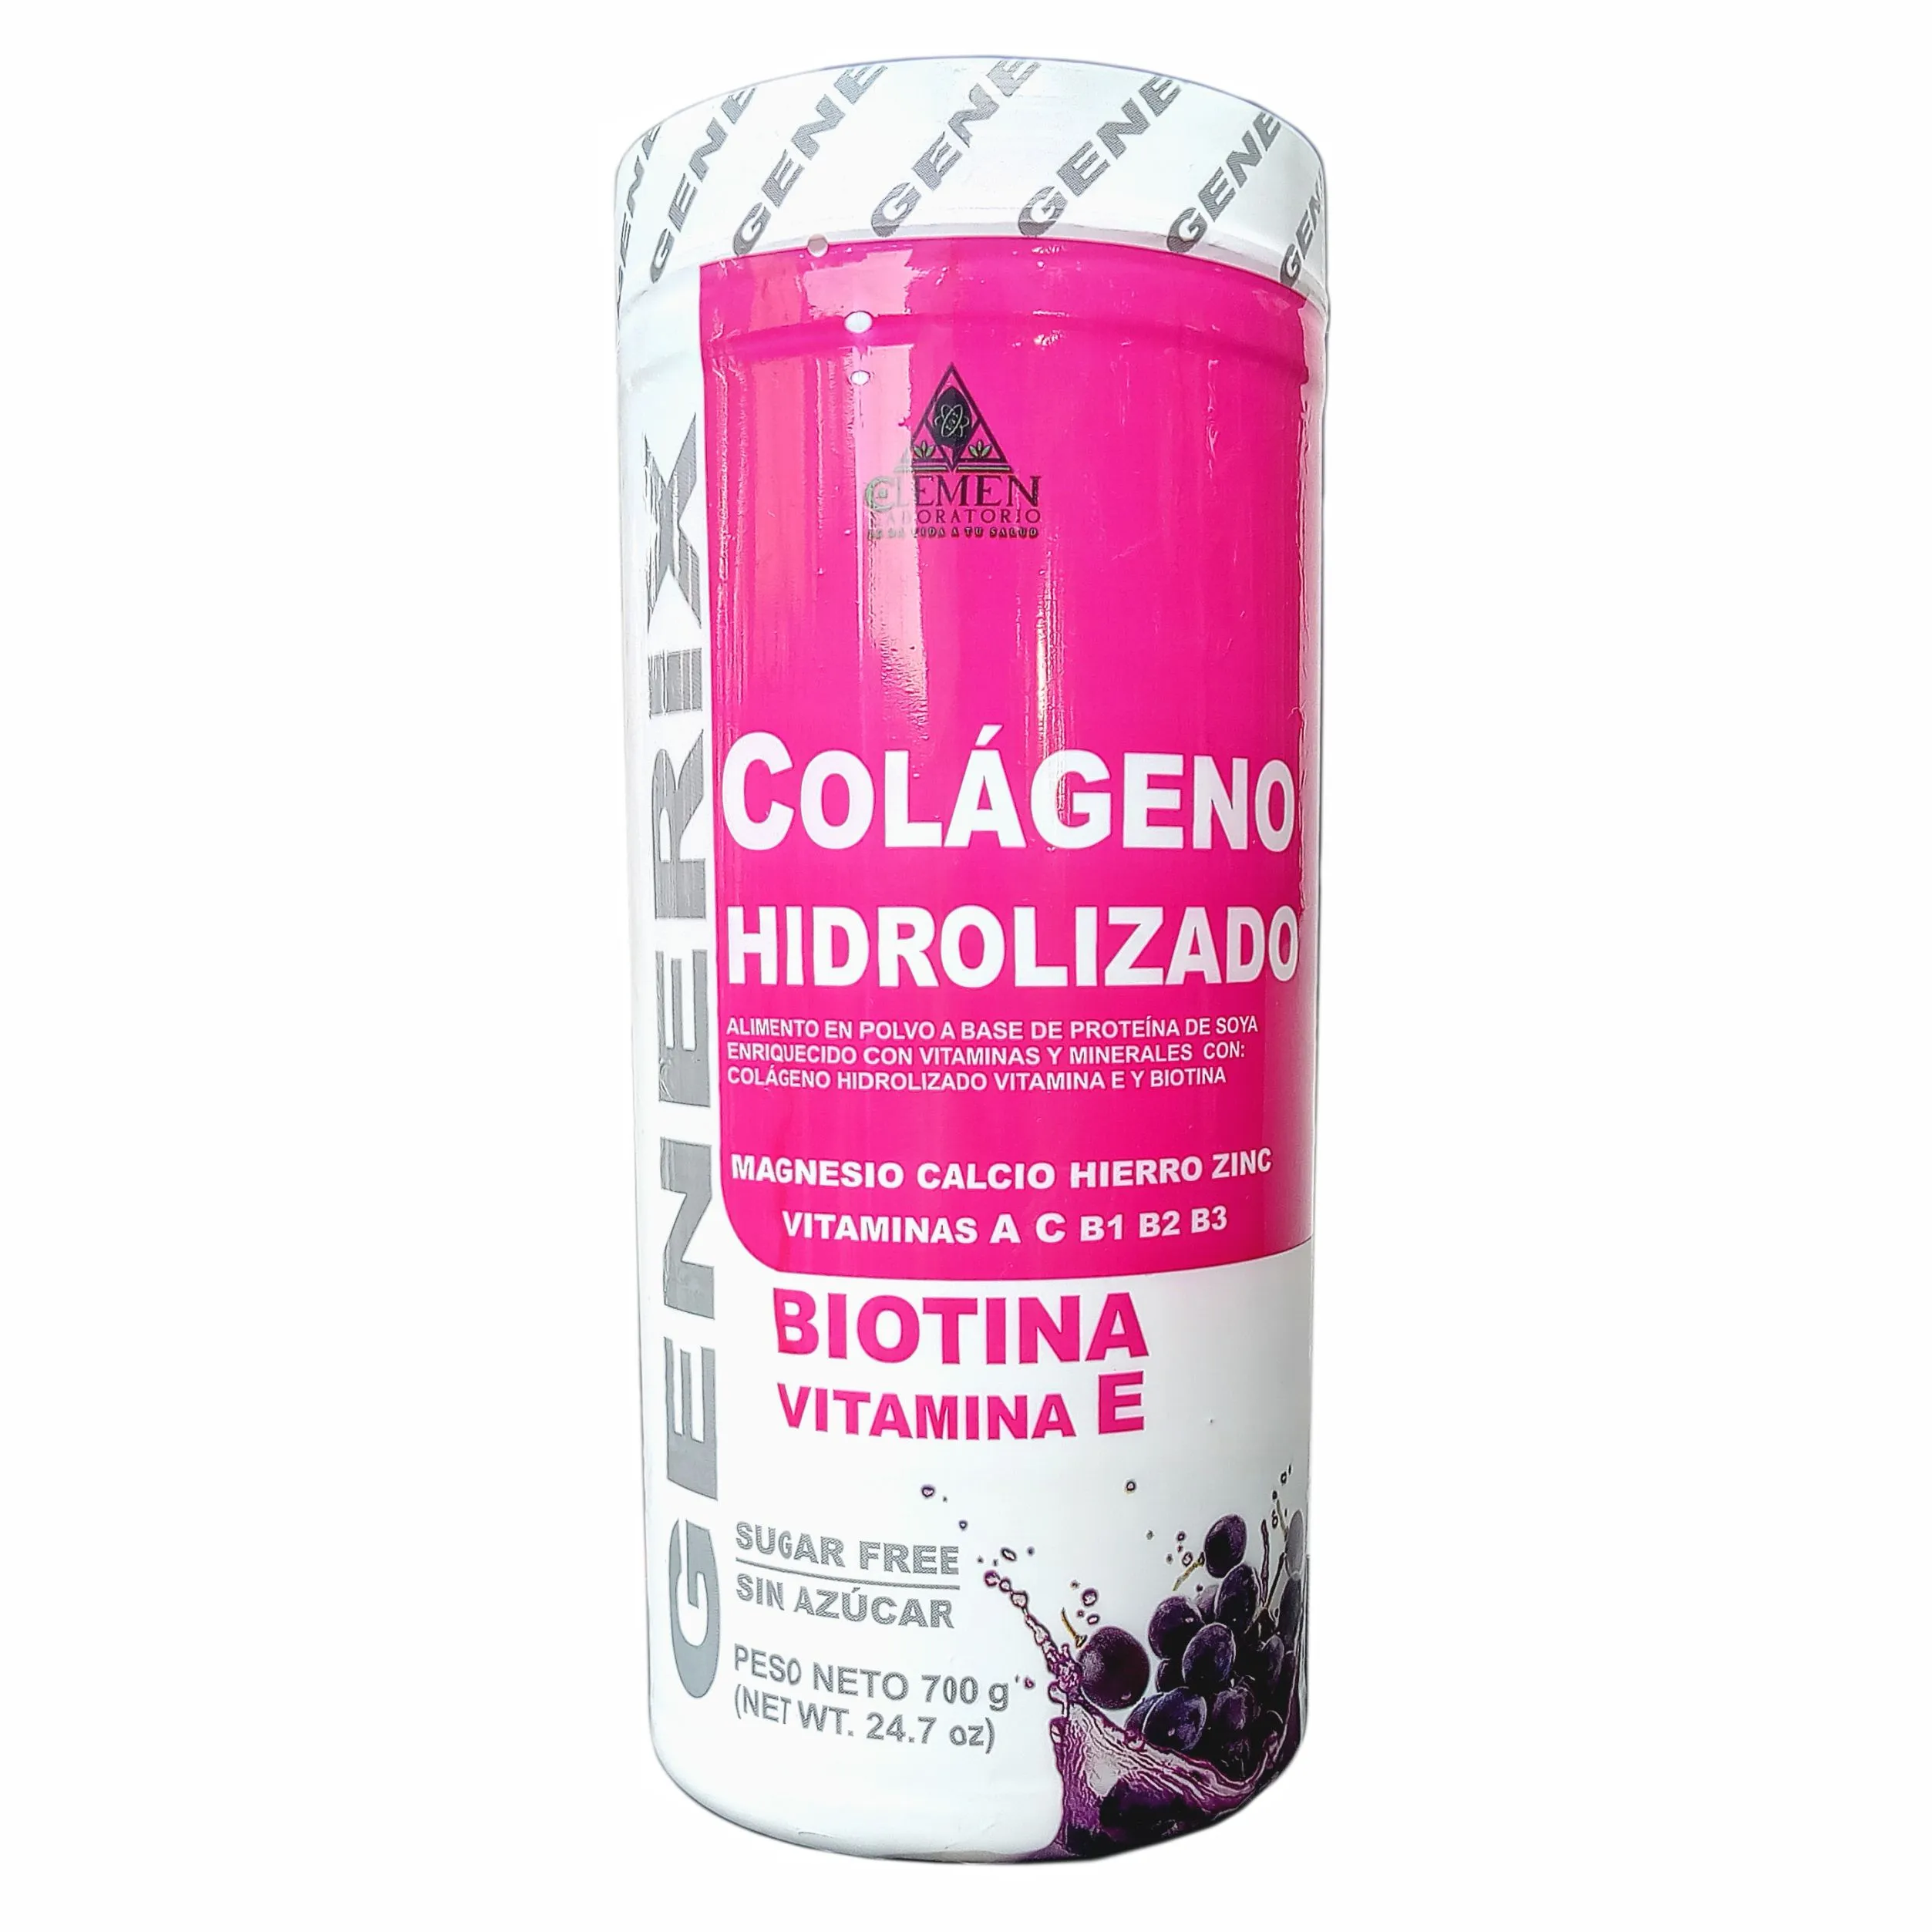 Colageno Hidrolizado + Biotina